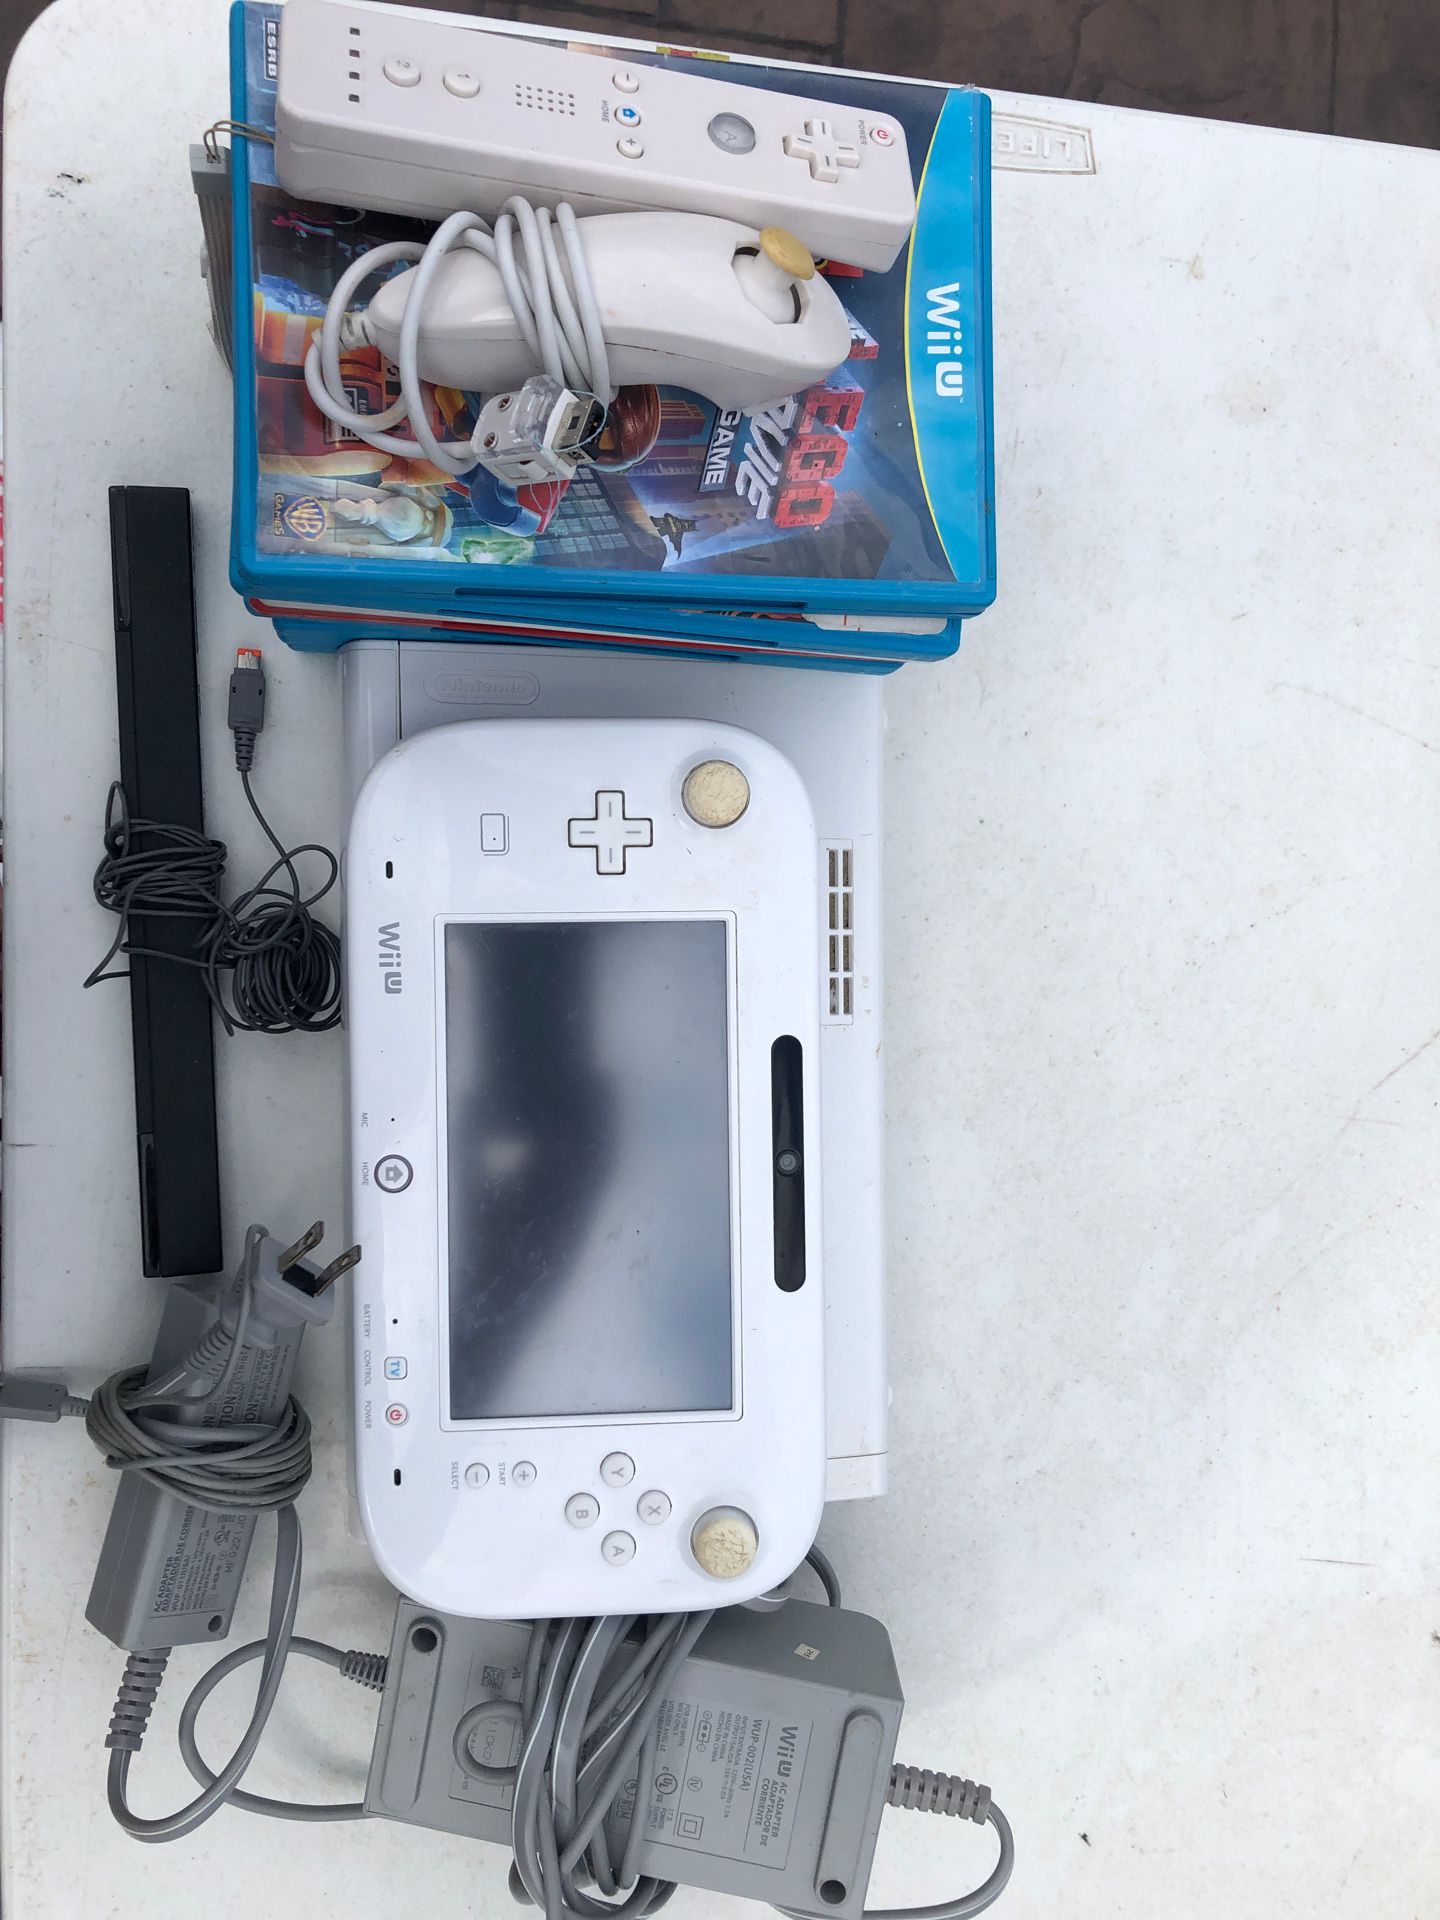 Nintendo Wii U, 9 games, joystick controller